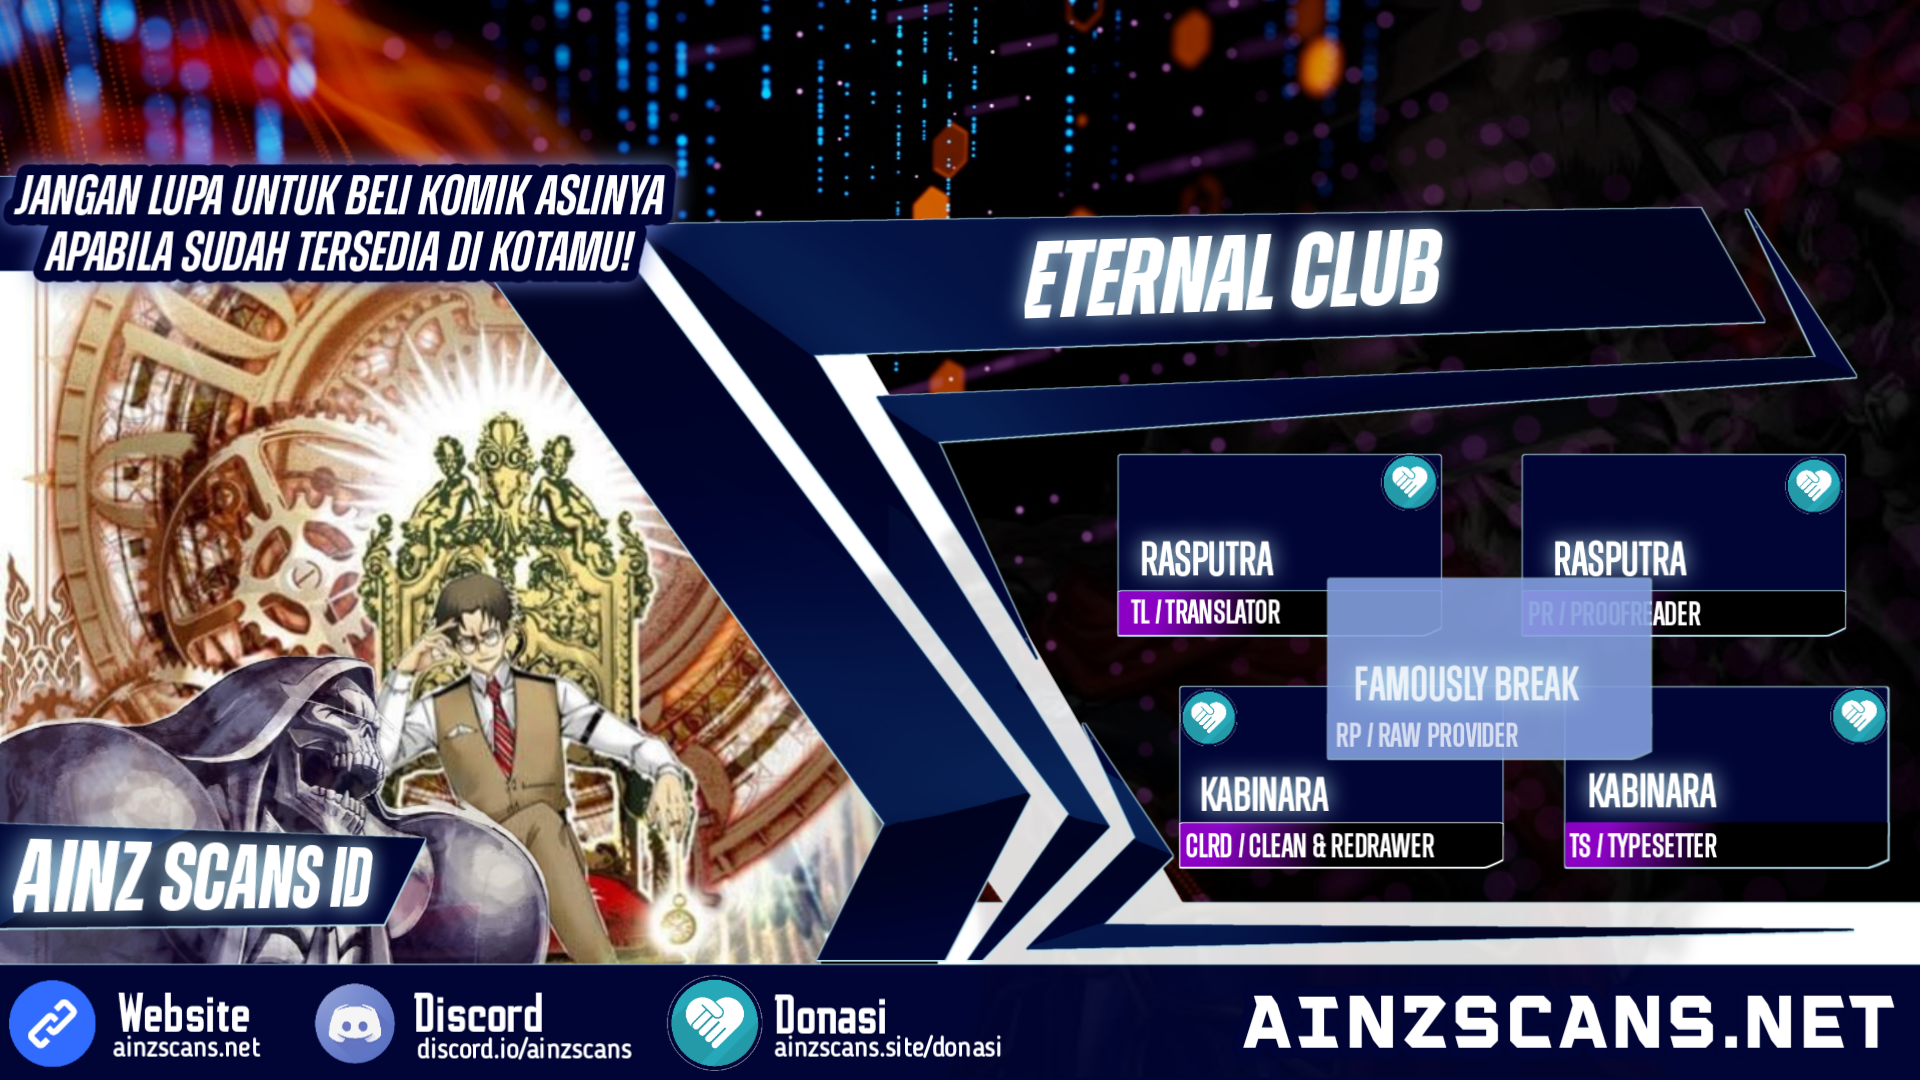 Eternal Club (I Built A Lifespan Club) Chapter 255 - 37